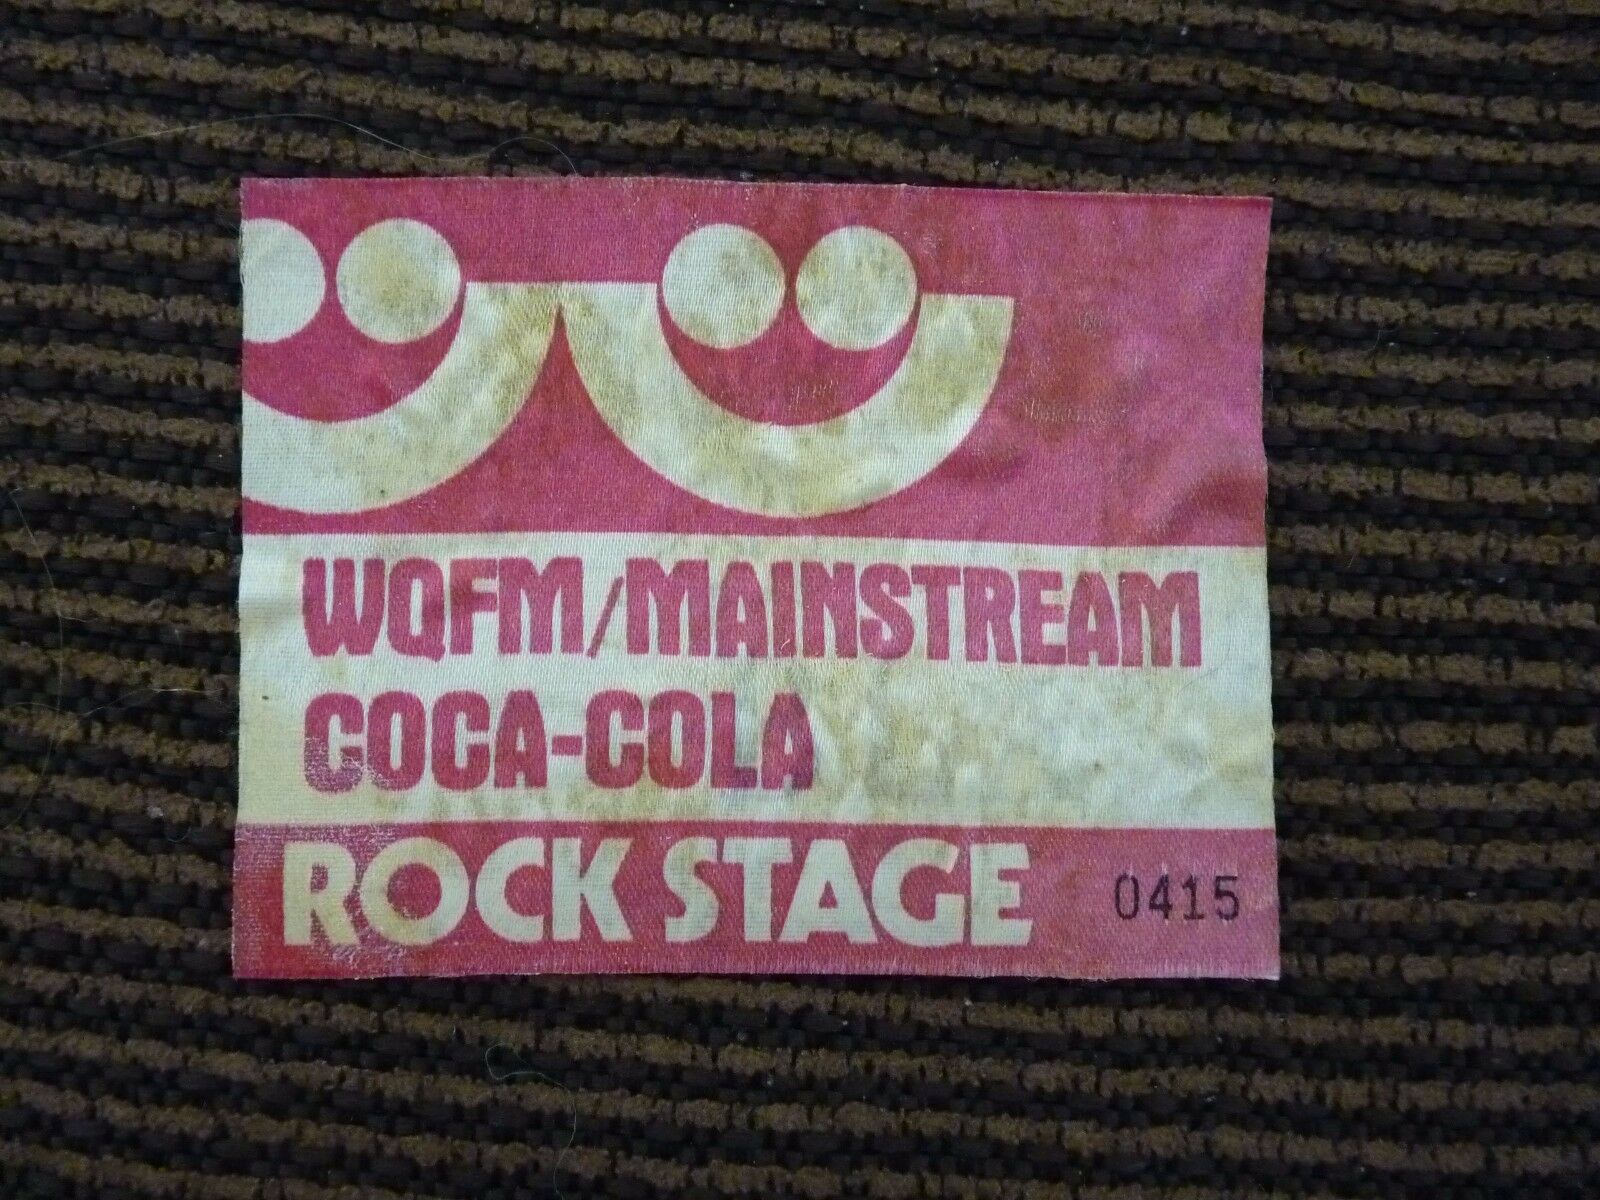 ROBIN TROWER 1985 WQFM MAINSTREAM COCA-COLA ROCK STAGE BACKSTAGE PASS STICKER COLLECTIBLE MEMORABILIA